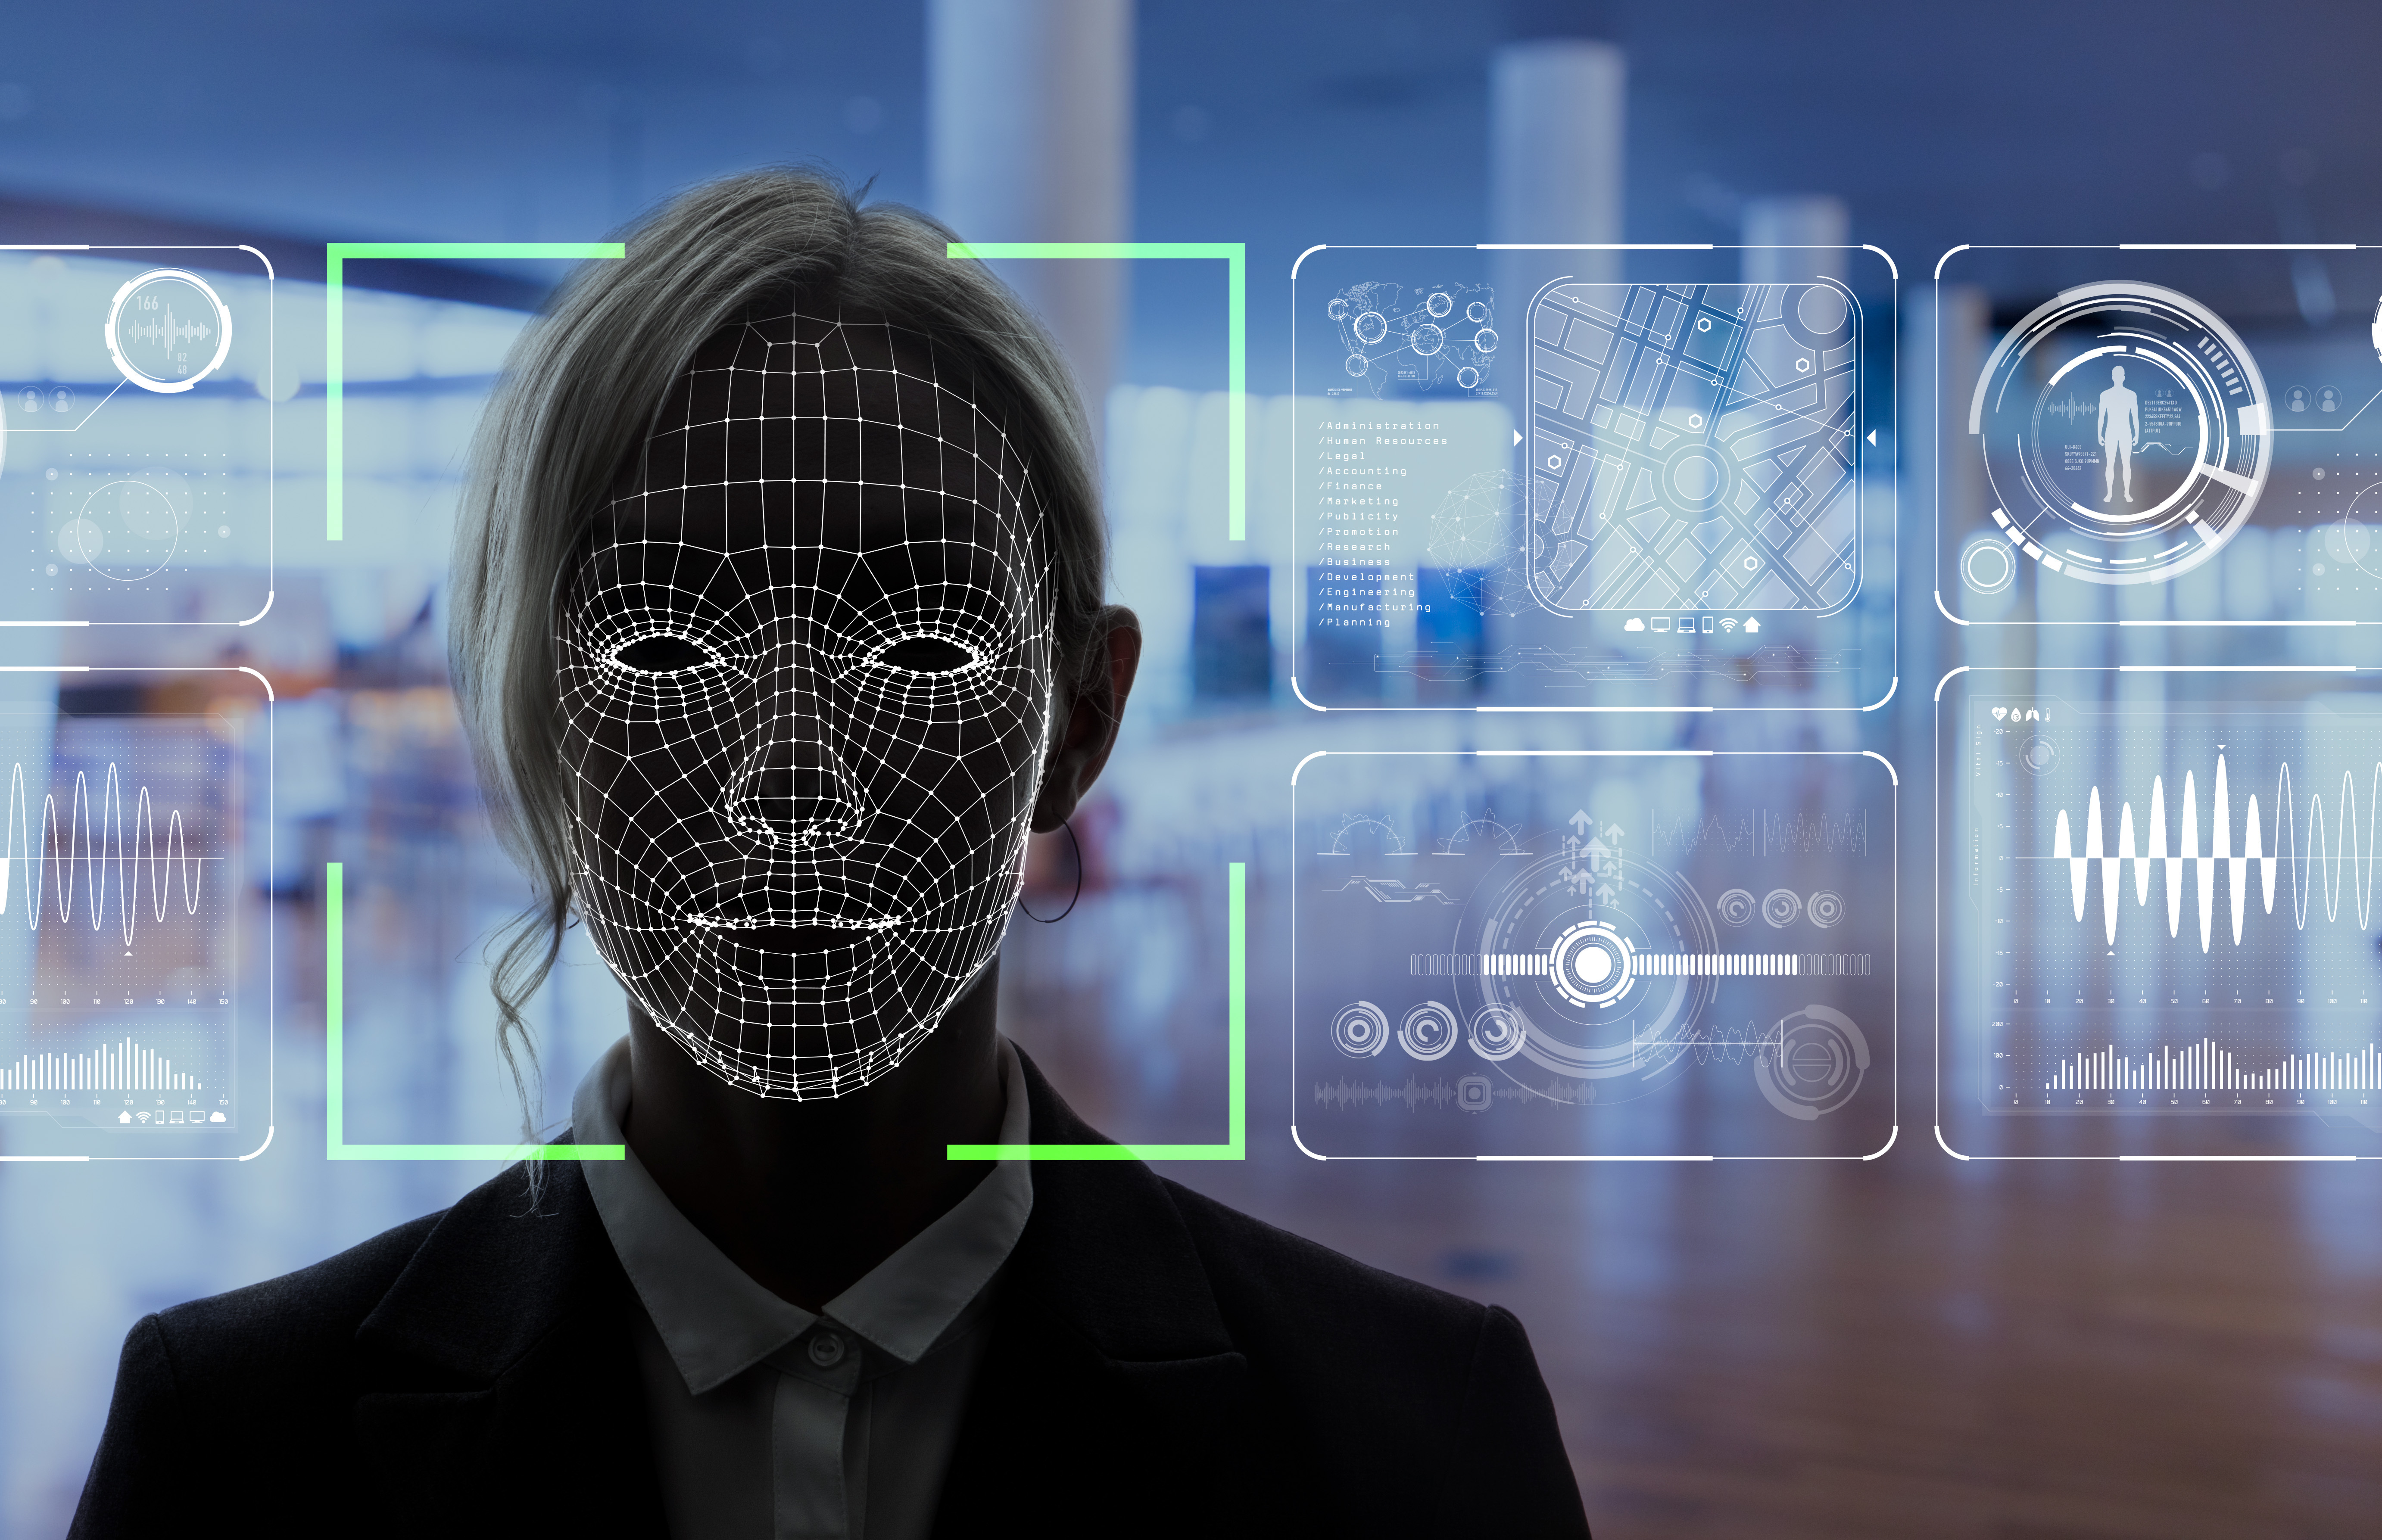 Facial-recognition tech creates service security options